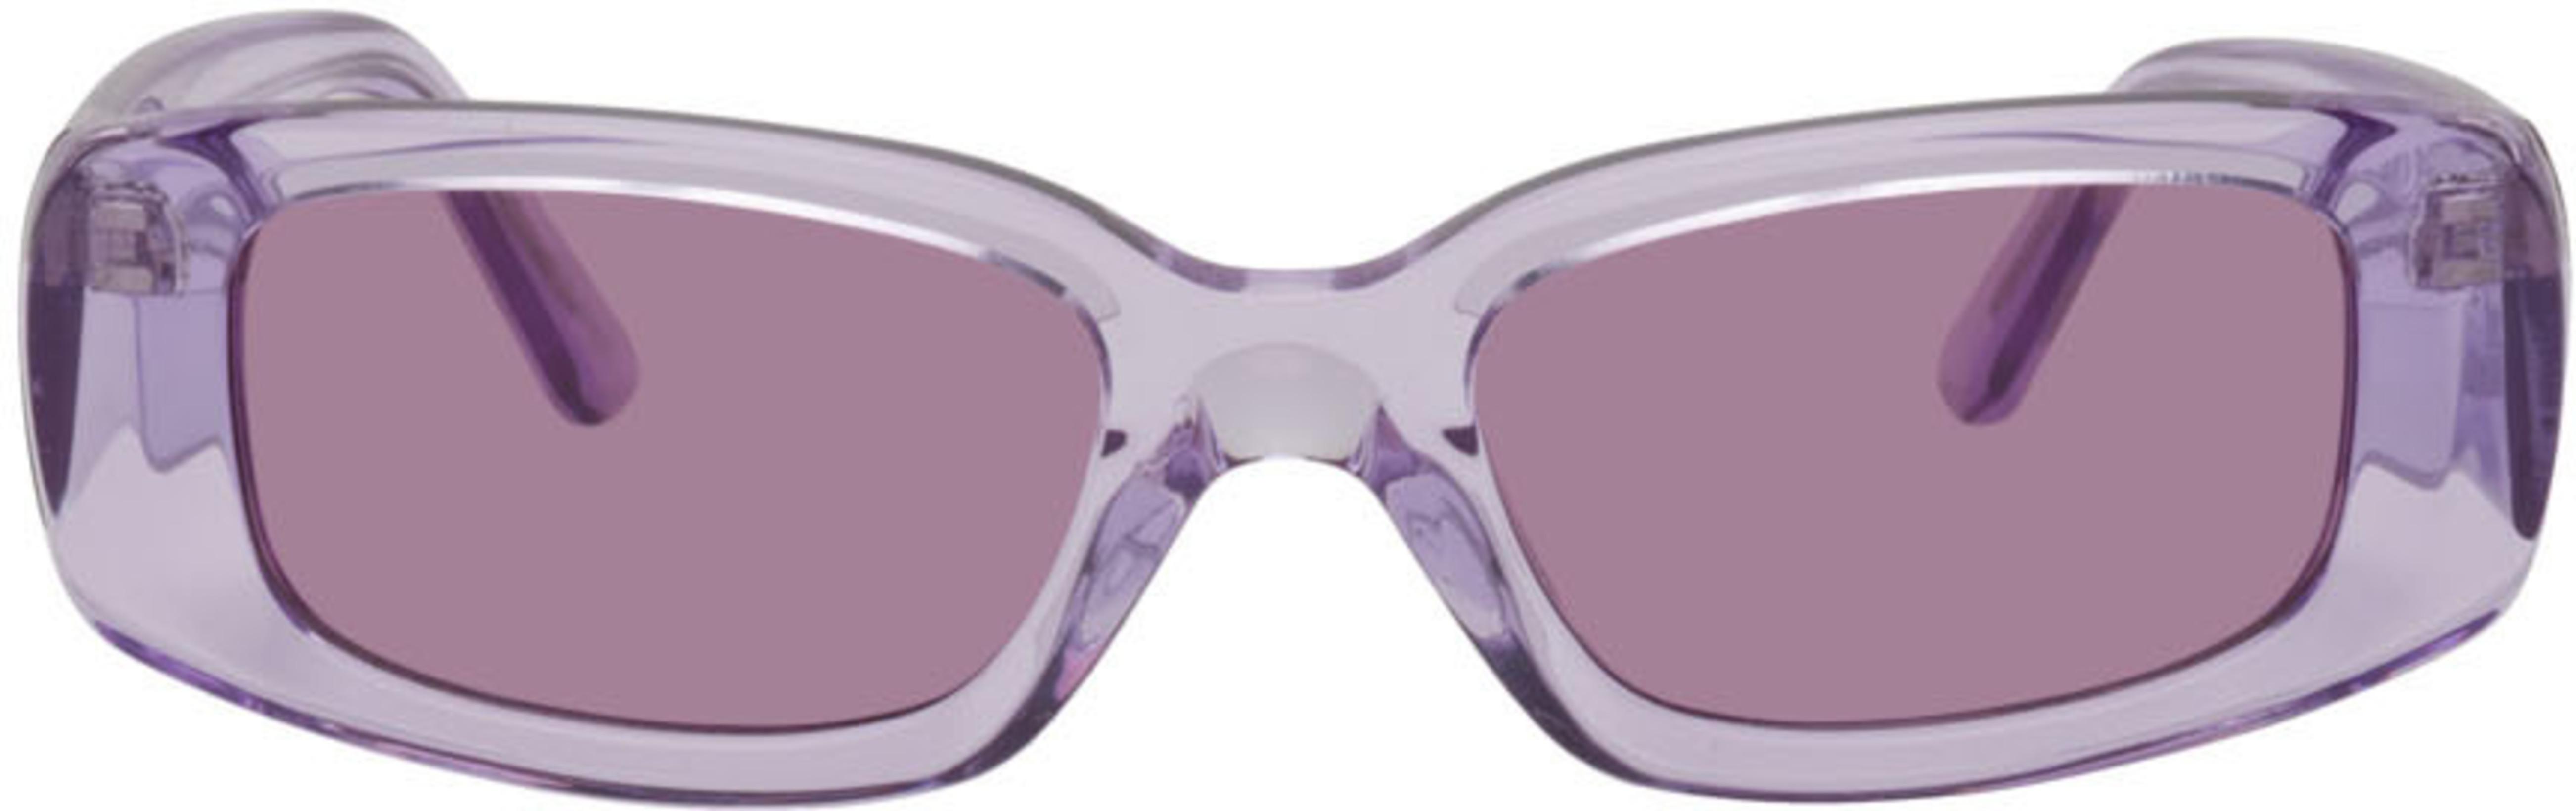 Purple 10.2 Sunglasses by CHIMI